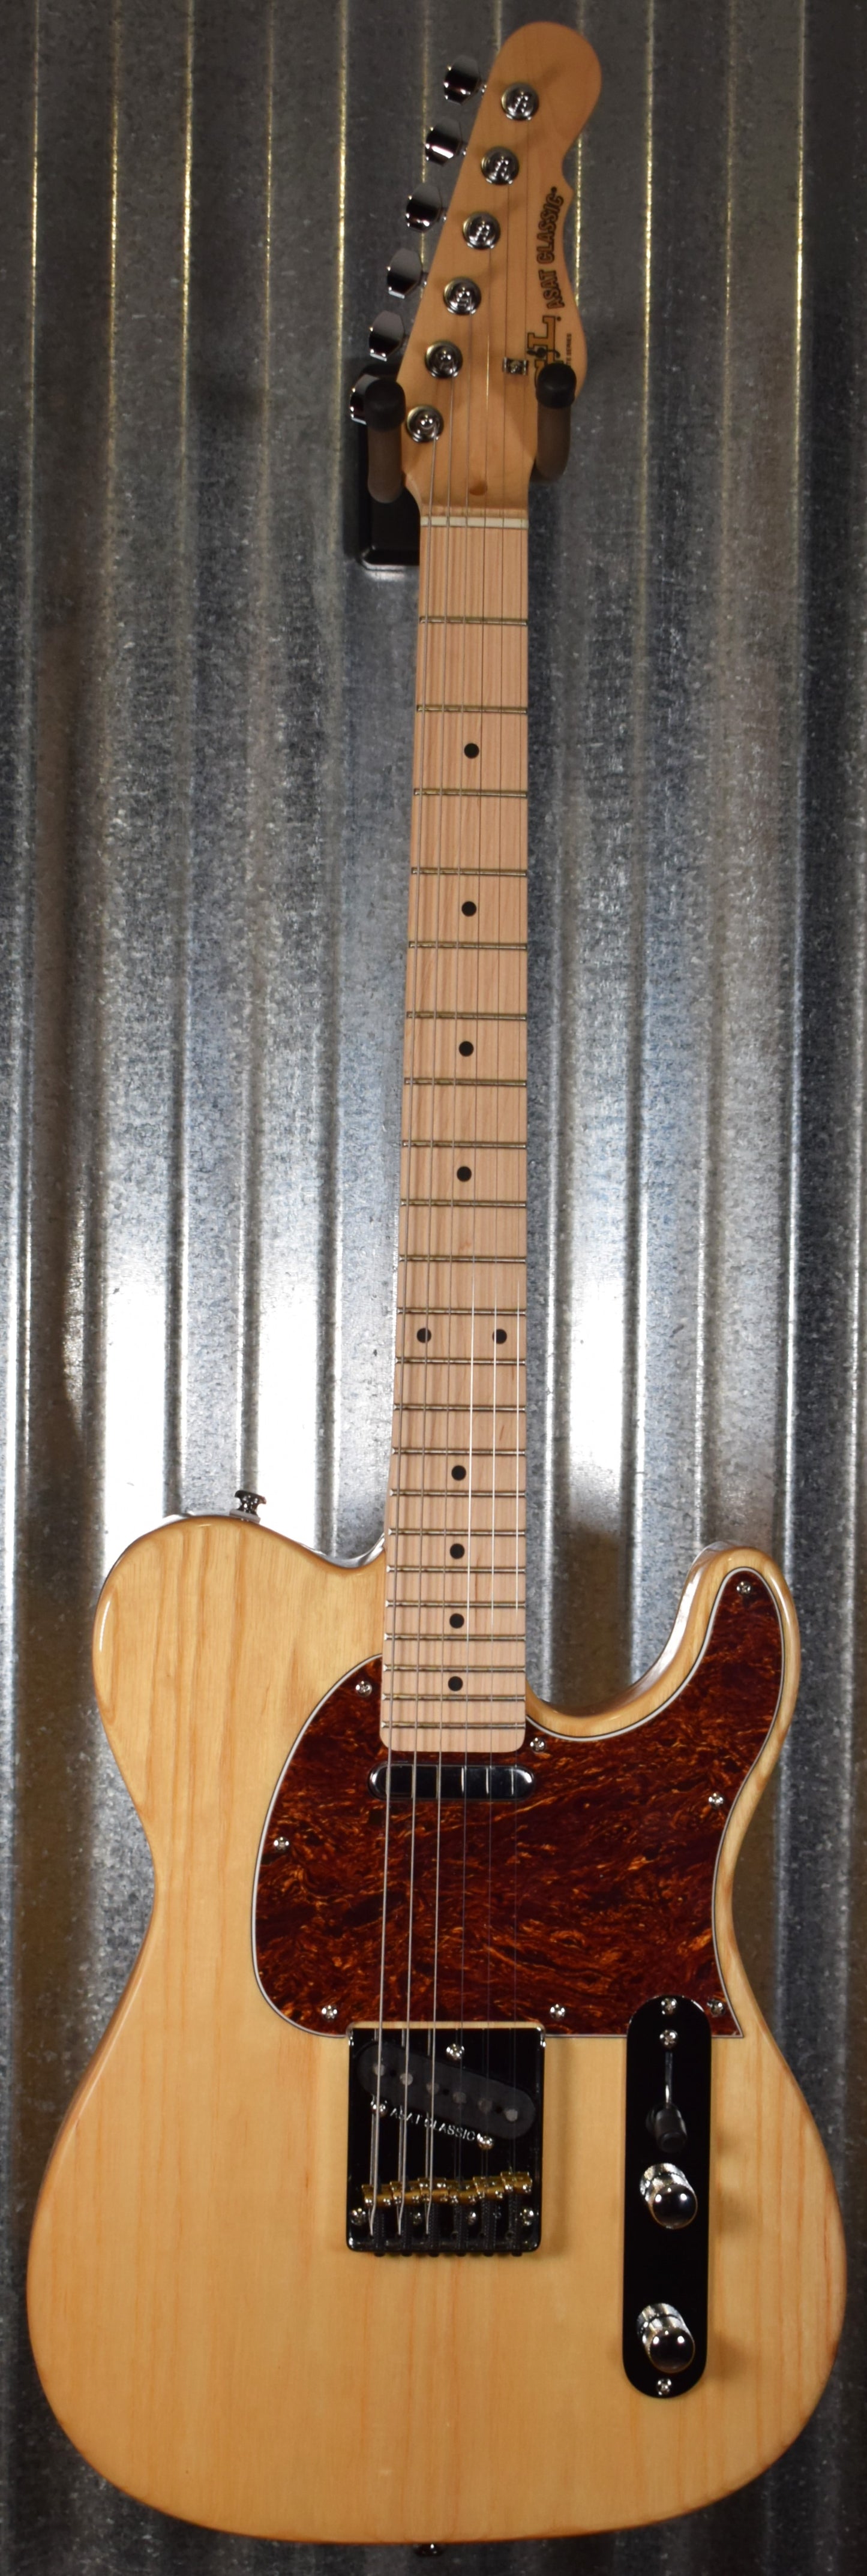 G&L Tribute ASAT Classic Natural Guitar #1008 Used